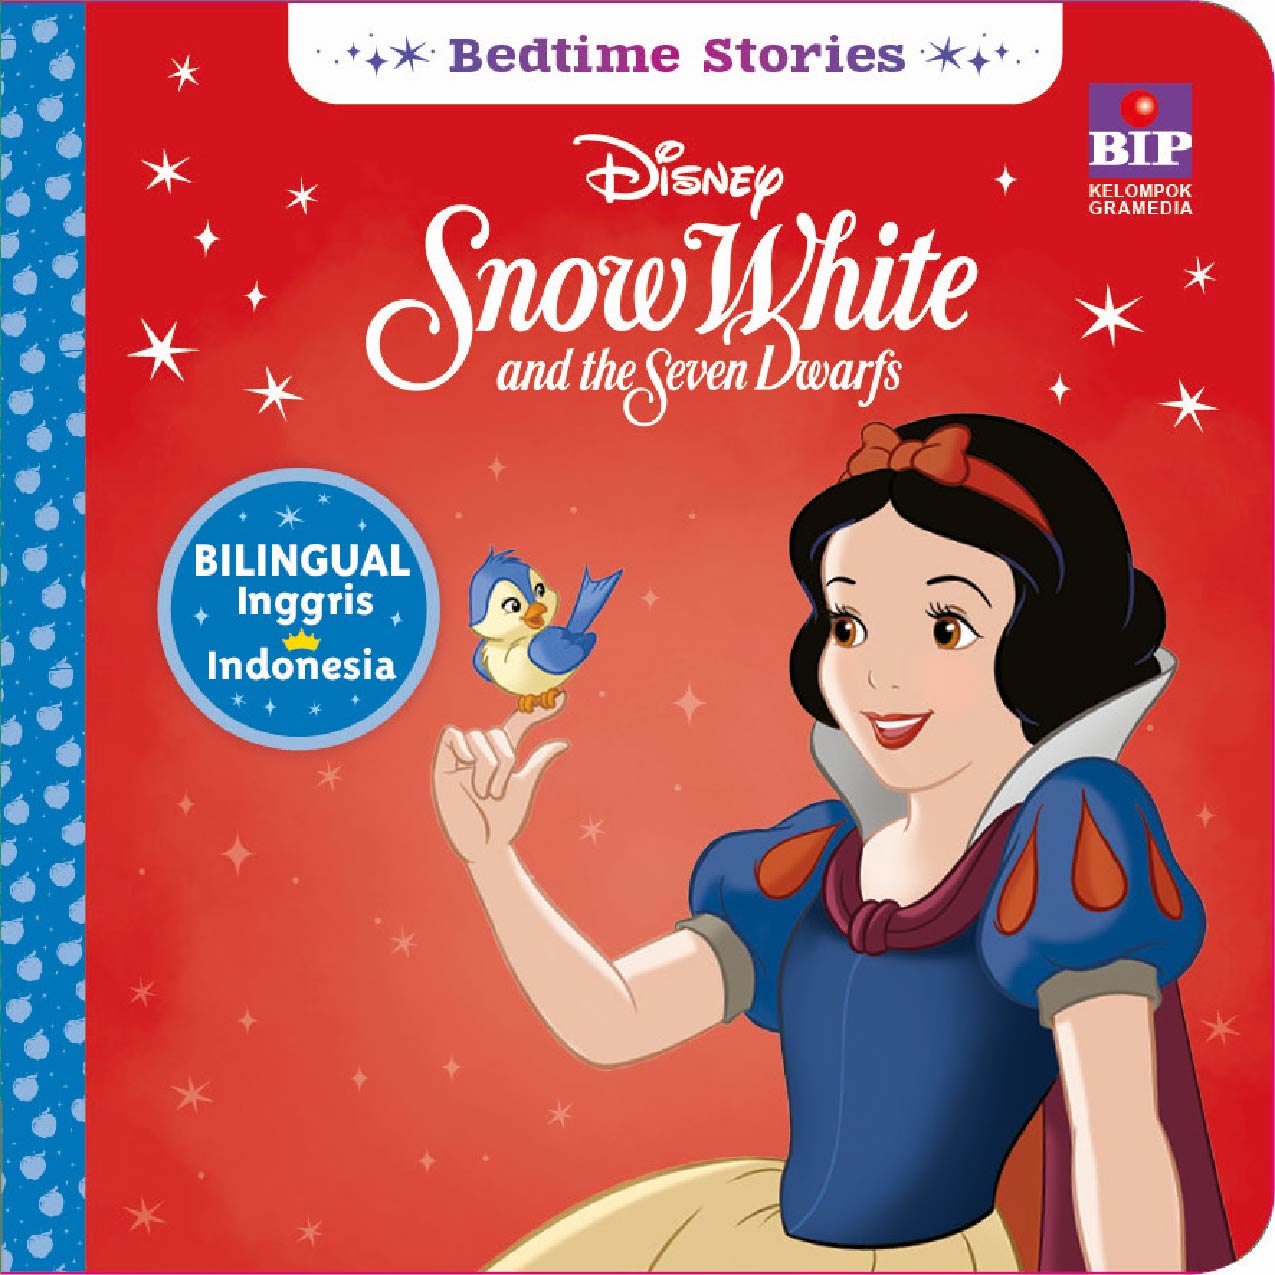 Bedtime Stories Disney: Snow White and the Seven Dwarfs